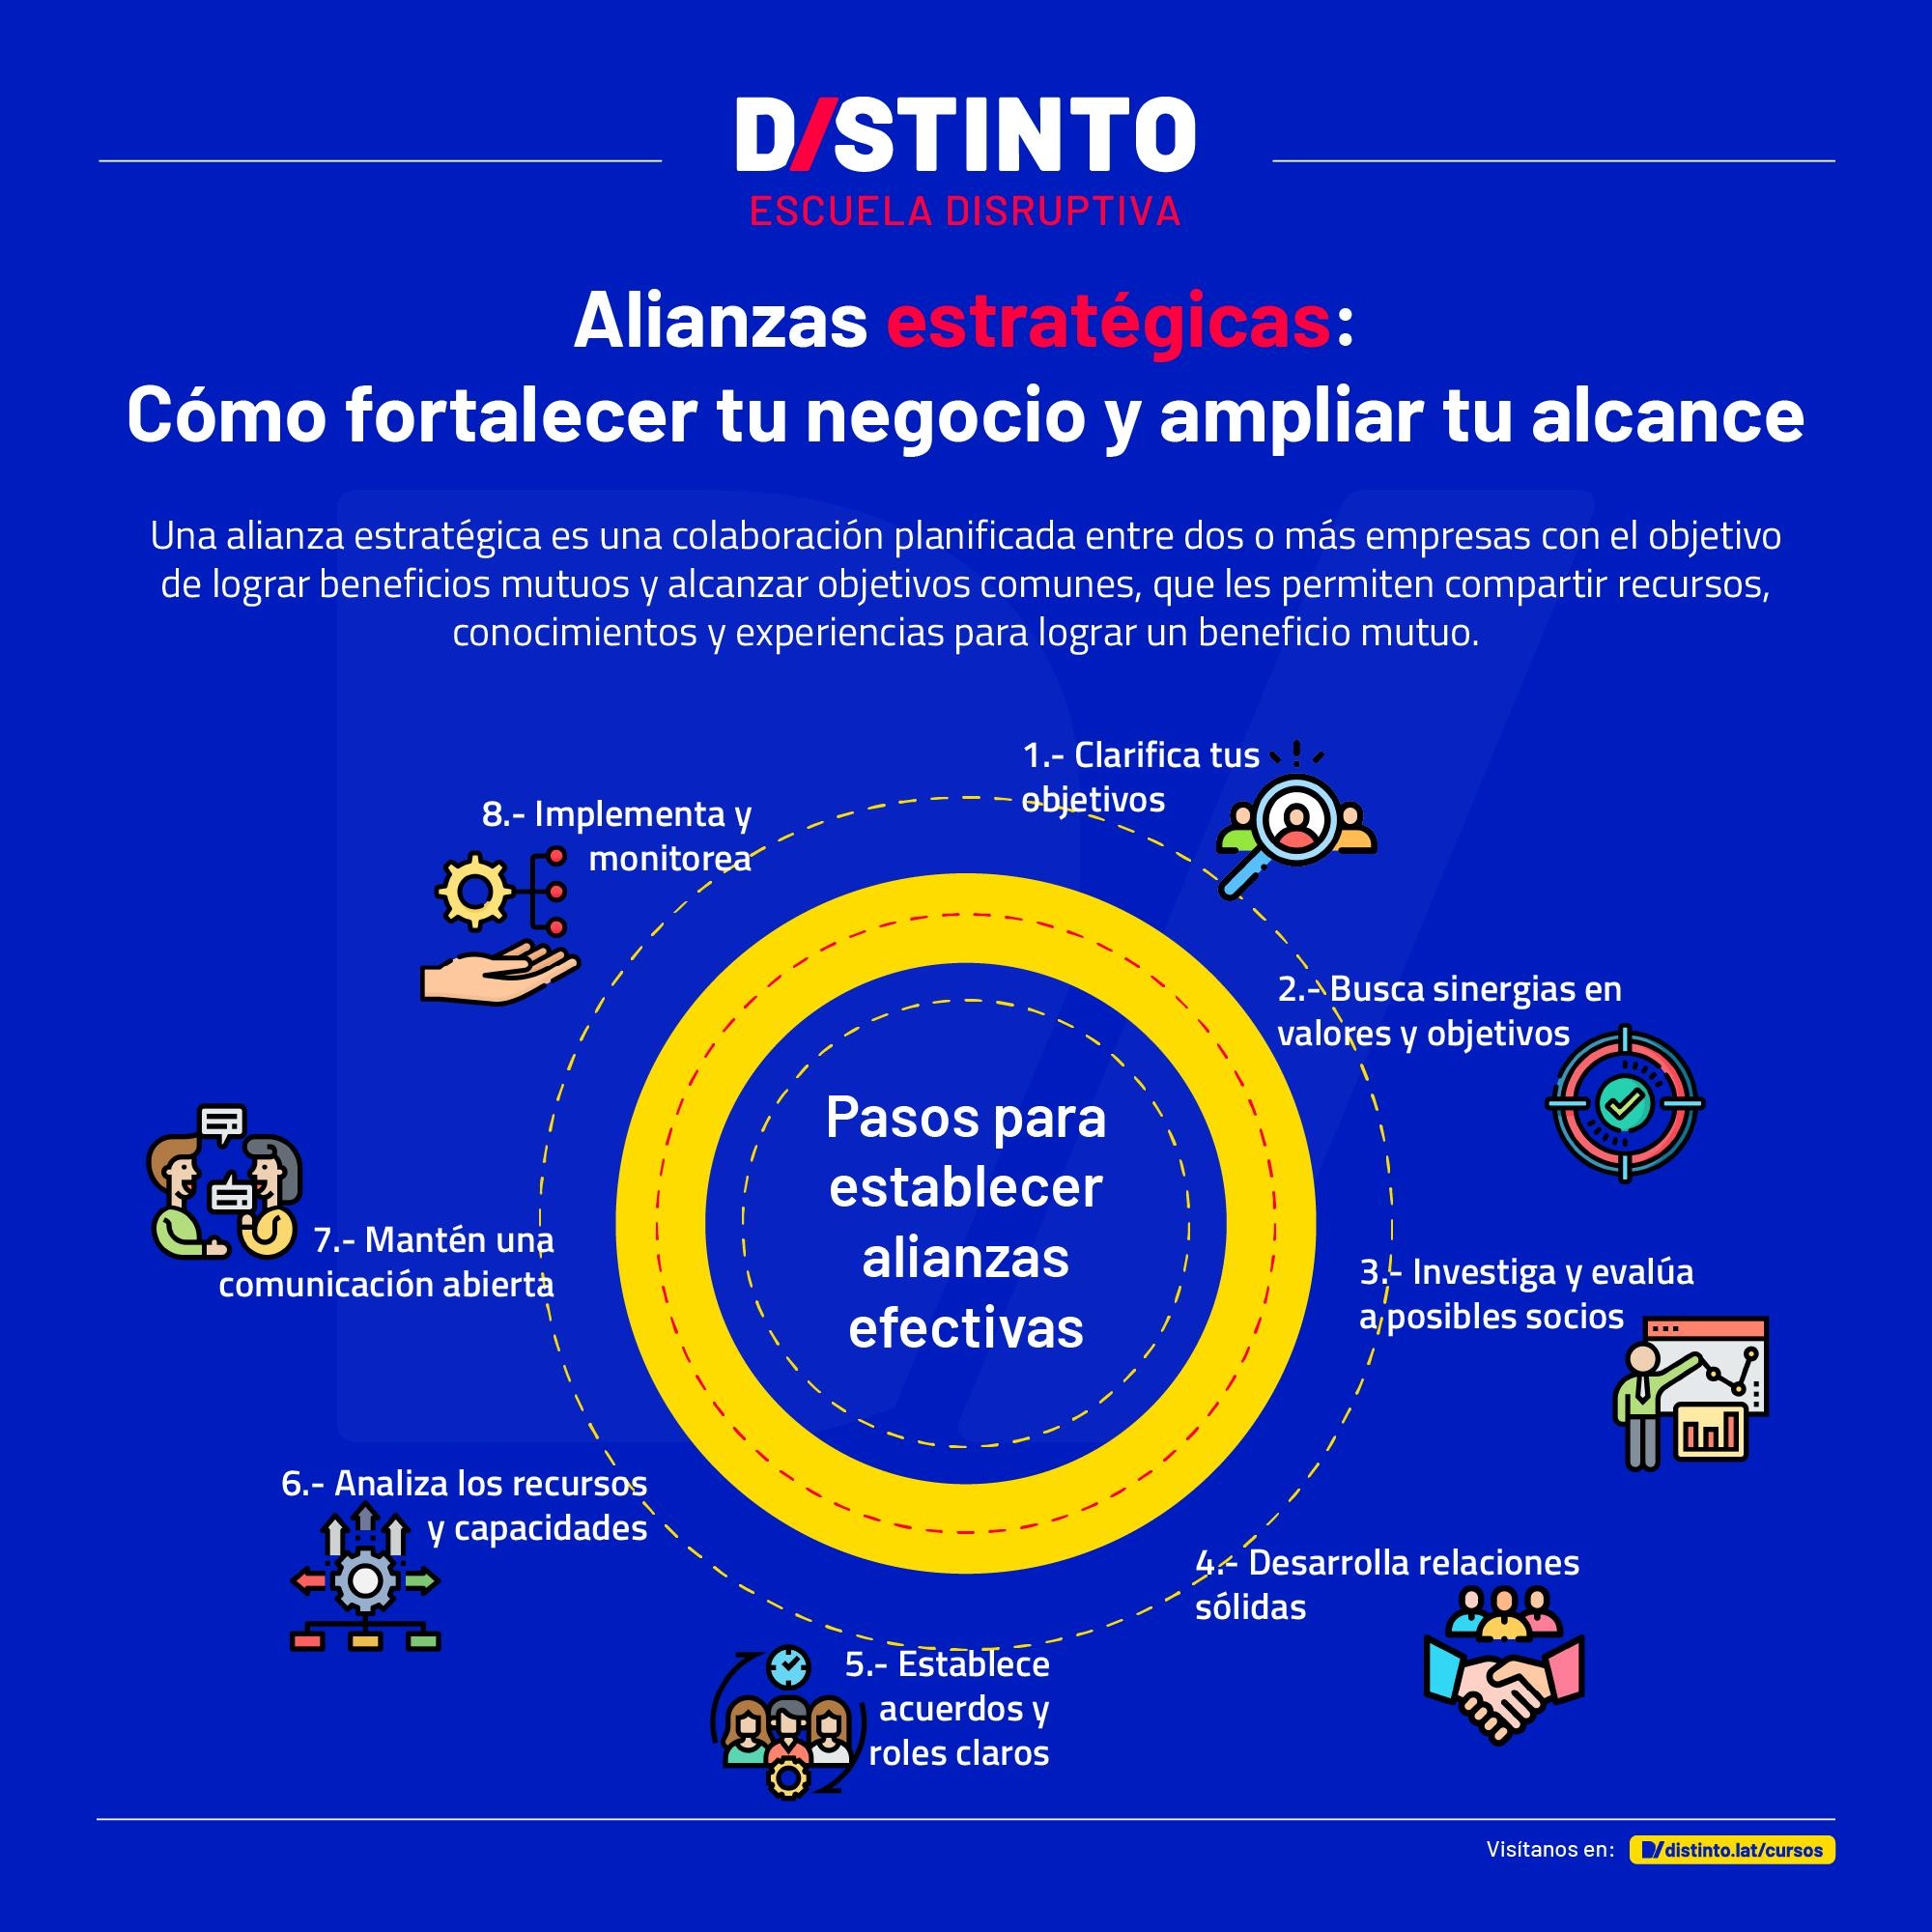 Pasos para esteblecer alianzas efectivas. Infografía realizada por Distinto Escuela Disruptiva.